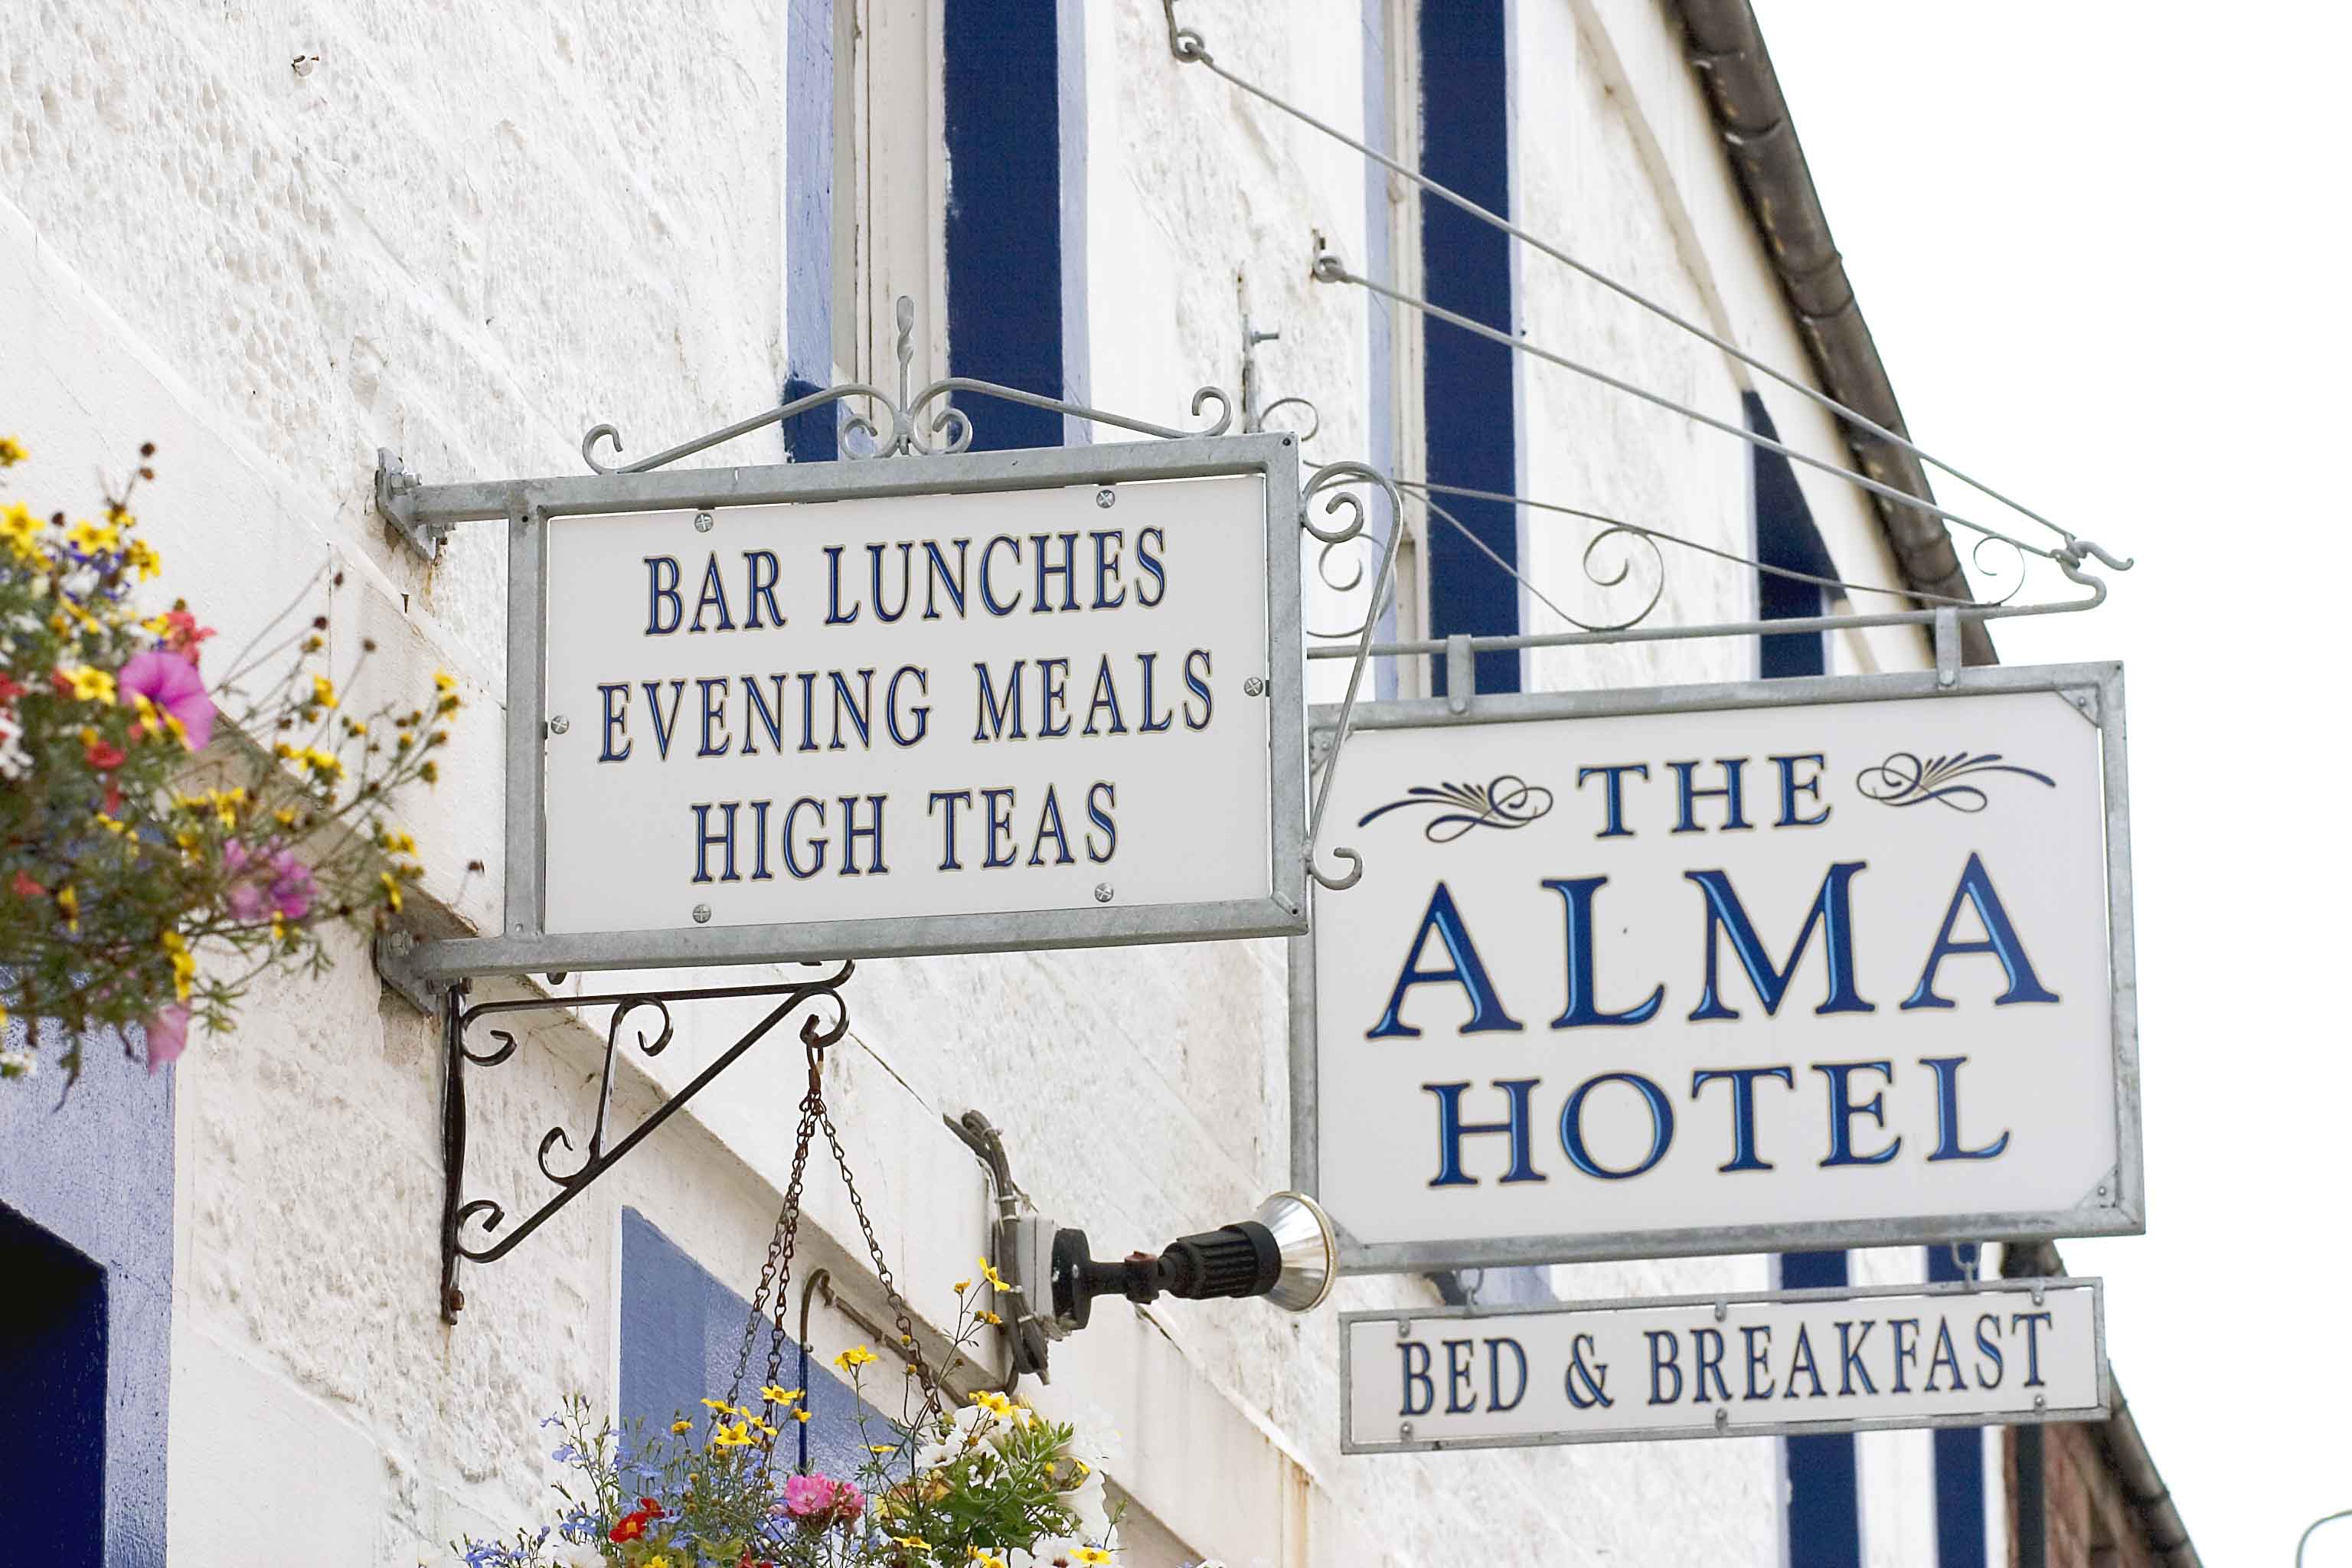 The Alma Hotel